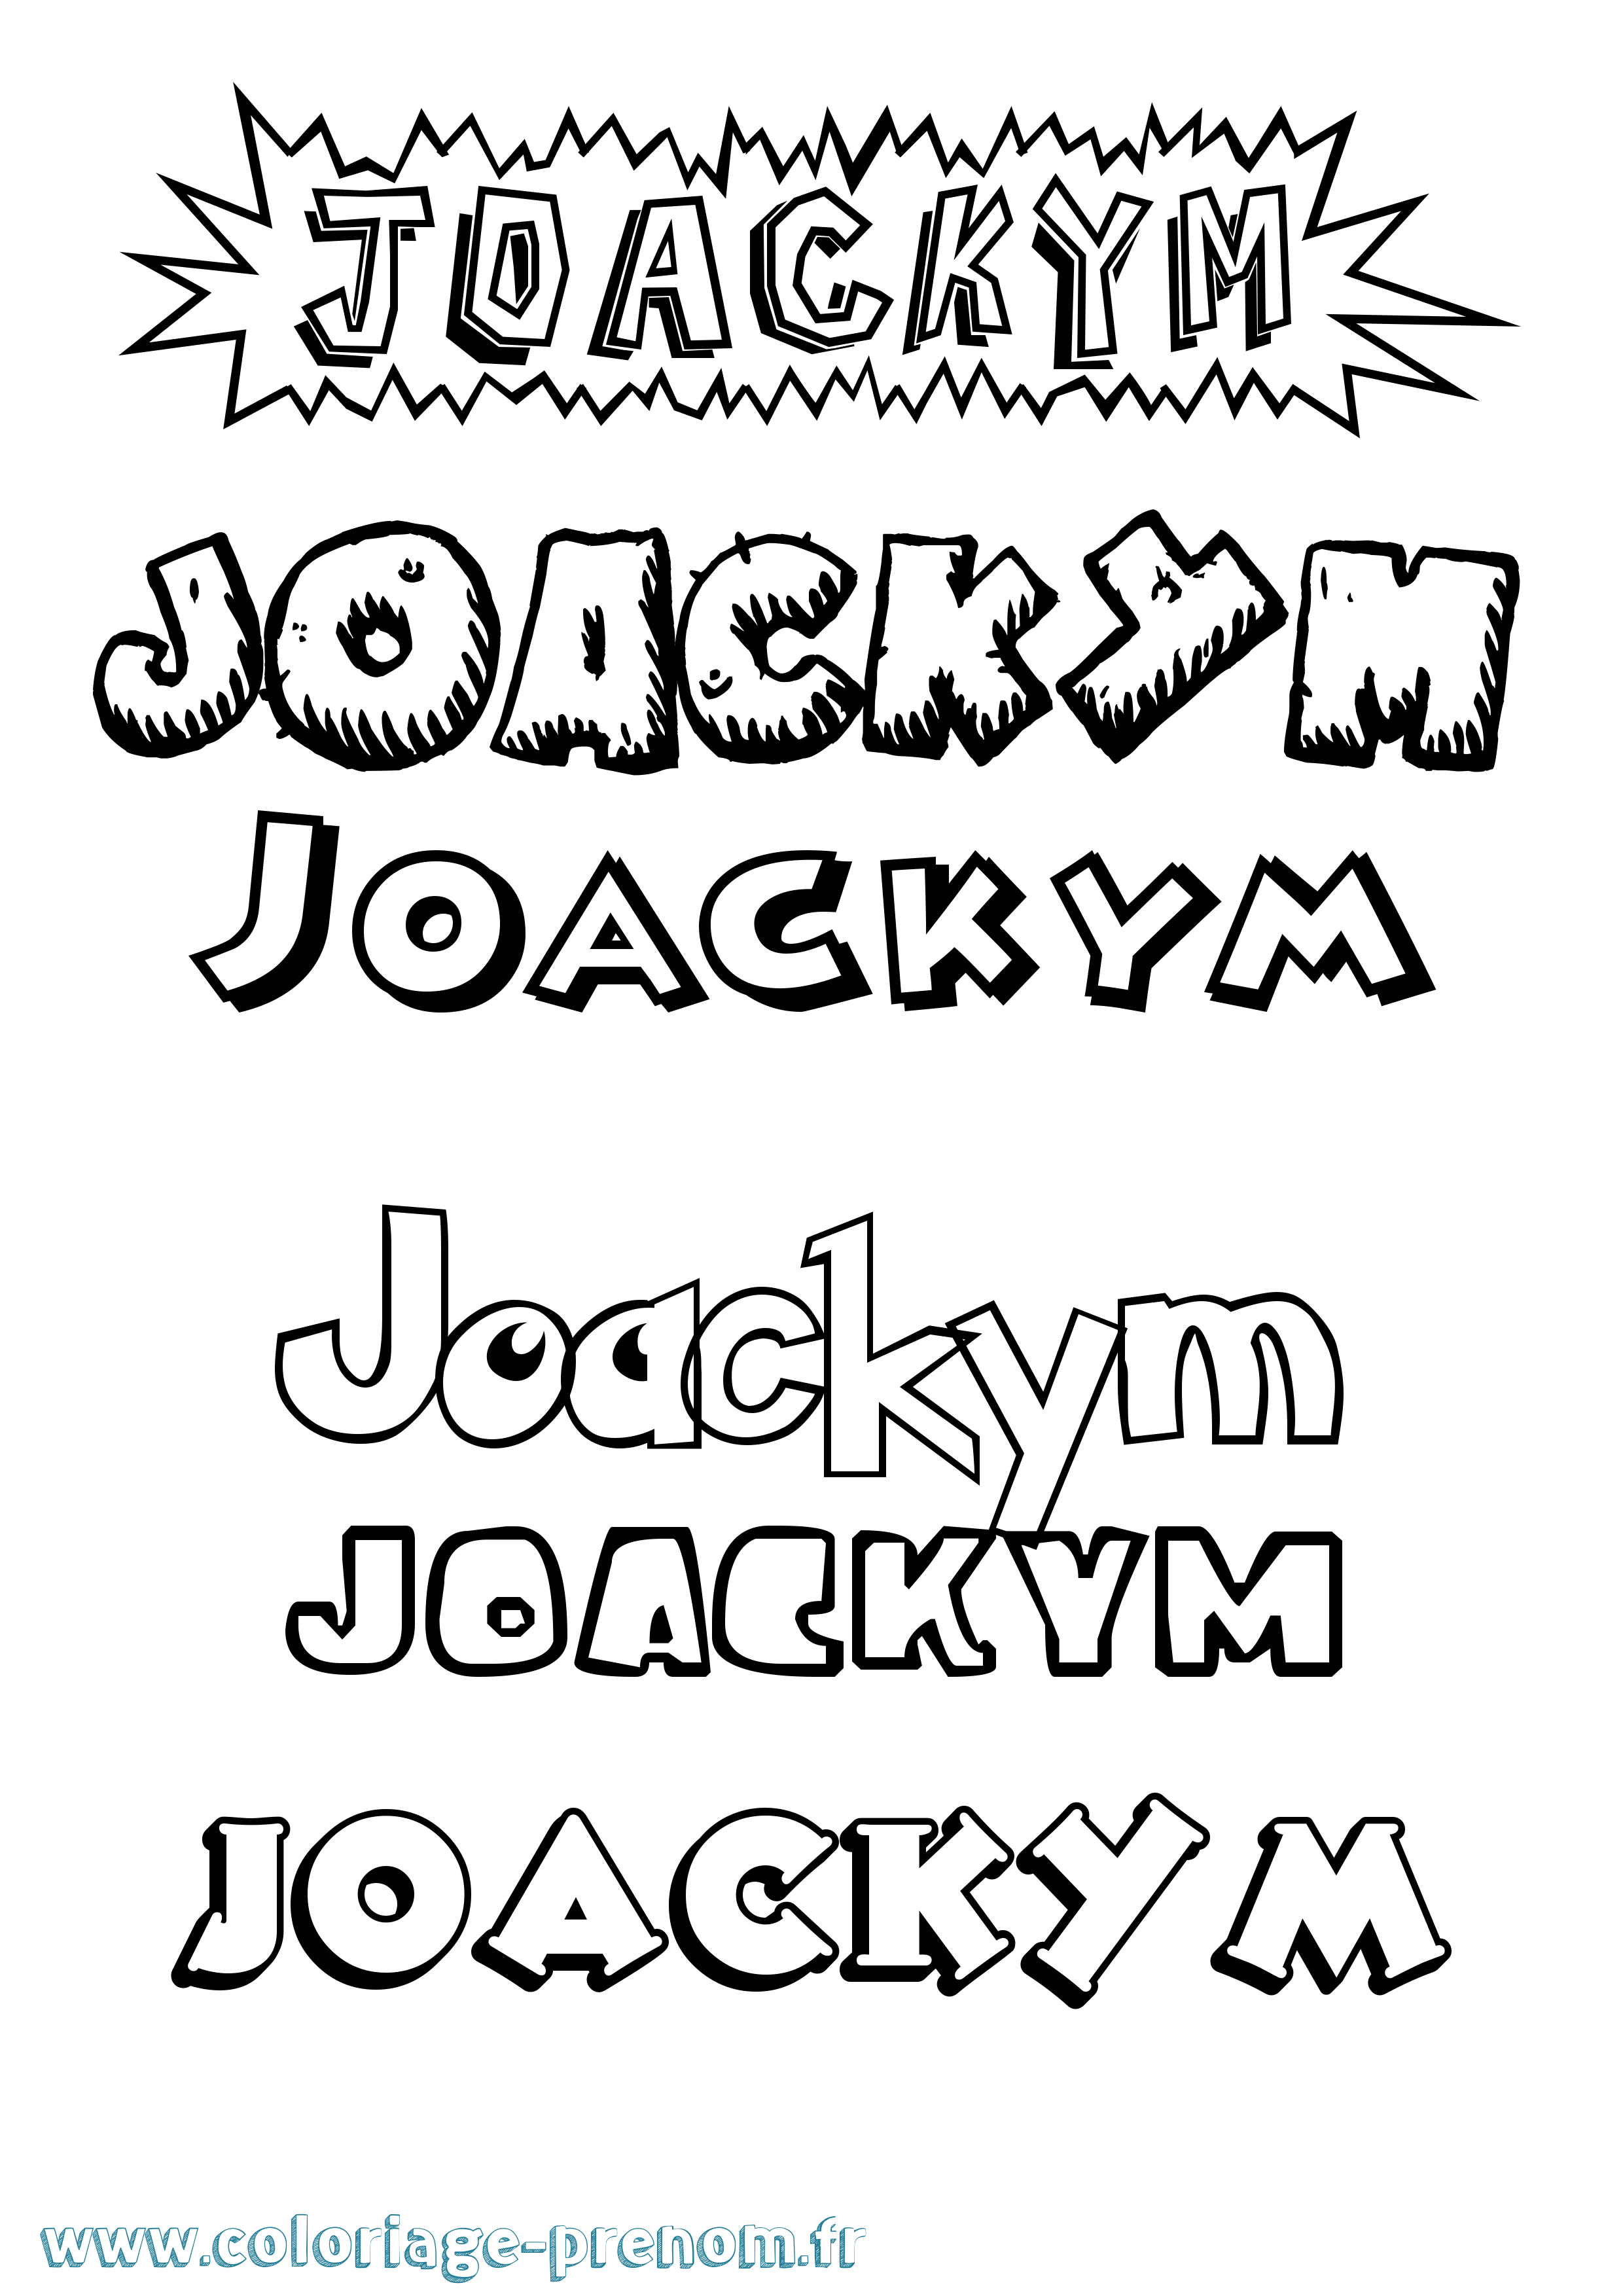 Coloriage prénom Joackym Dessin Animé